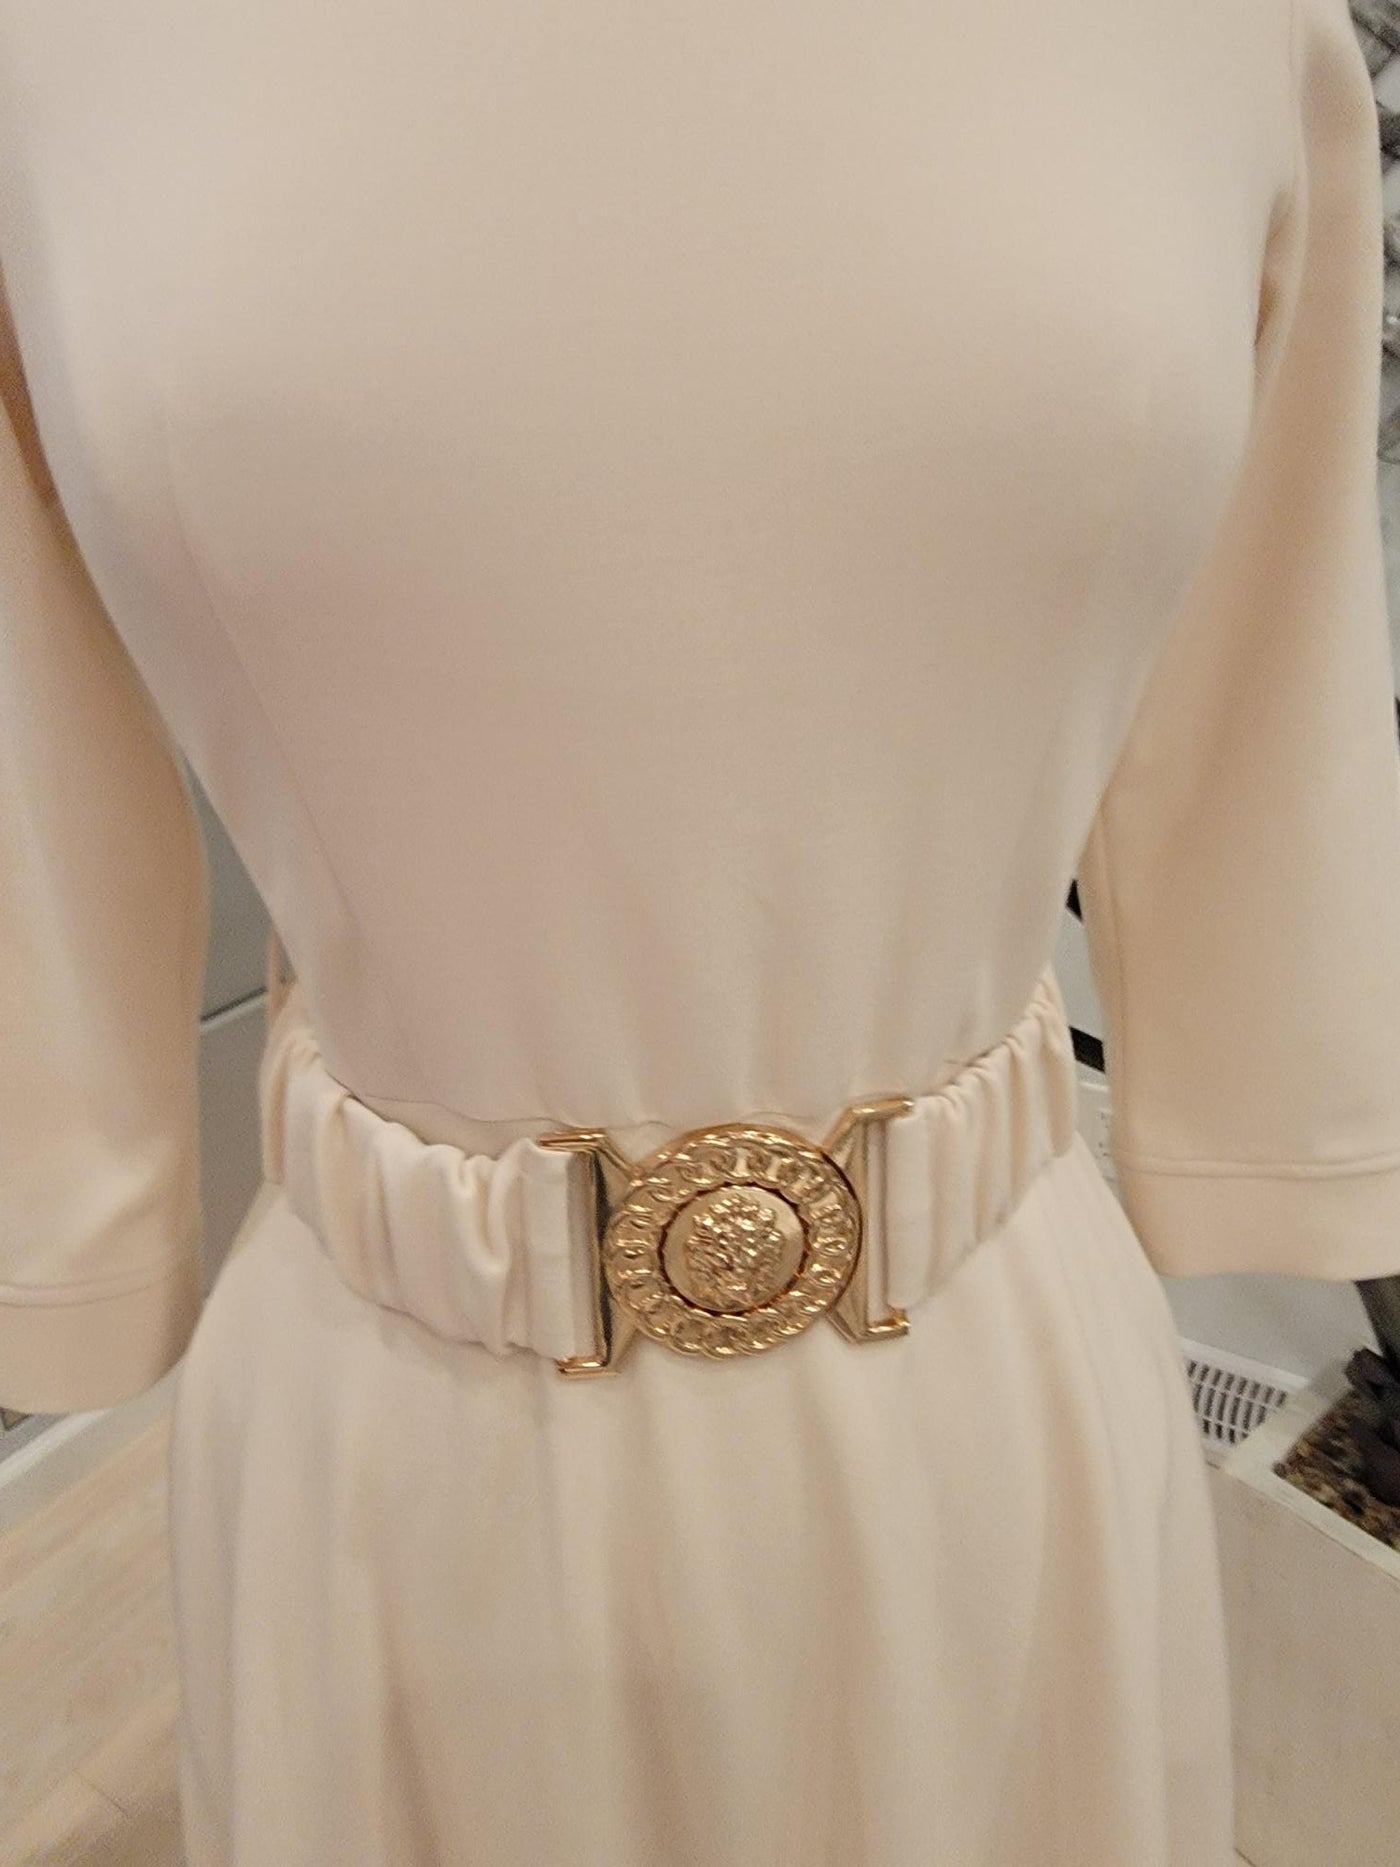 Belted A-line dress